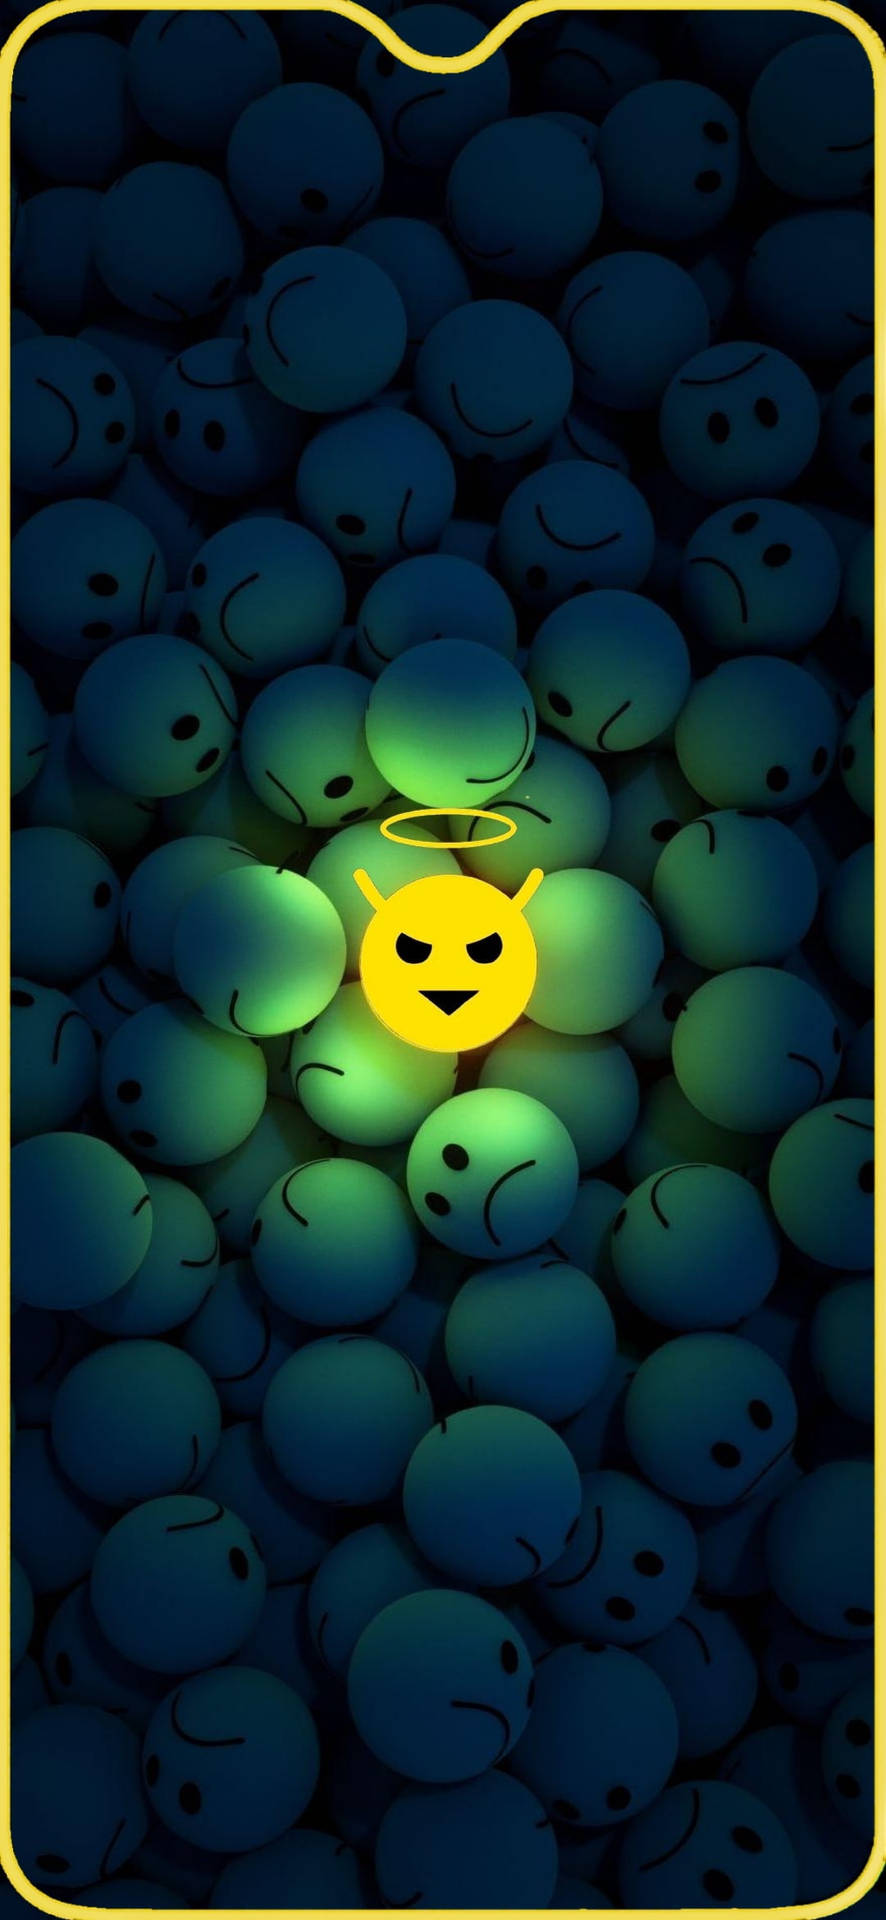 Vibrant Poco X2 With A Cheerful Yellow Emoji Background